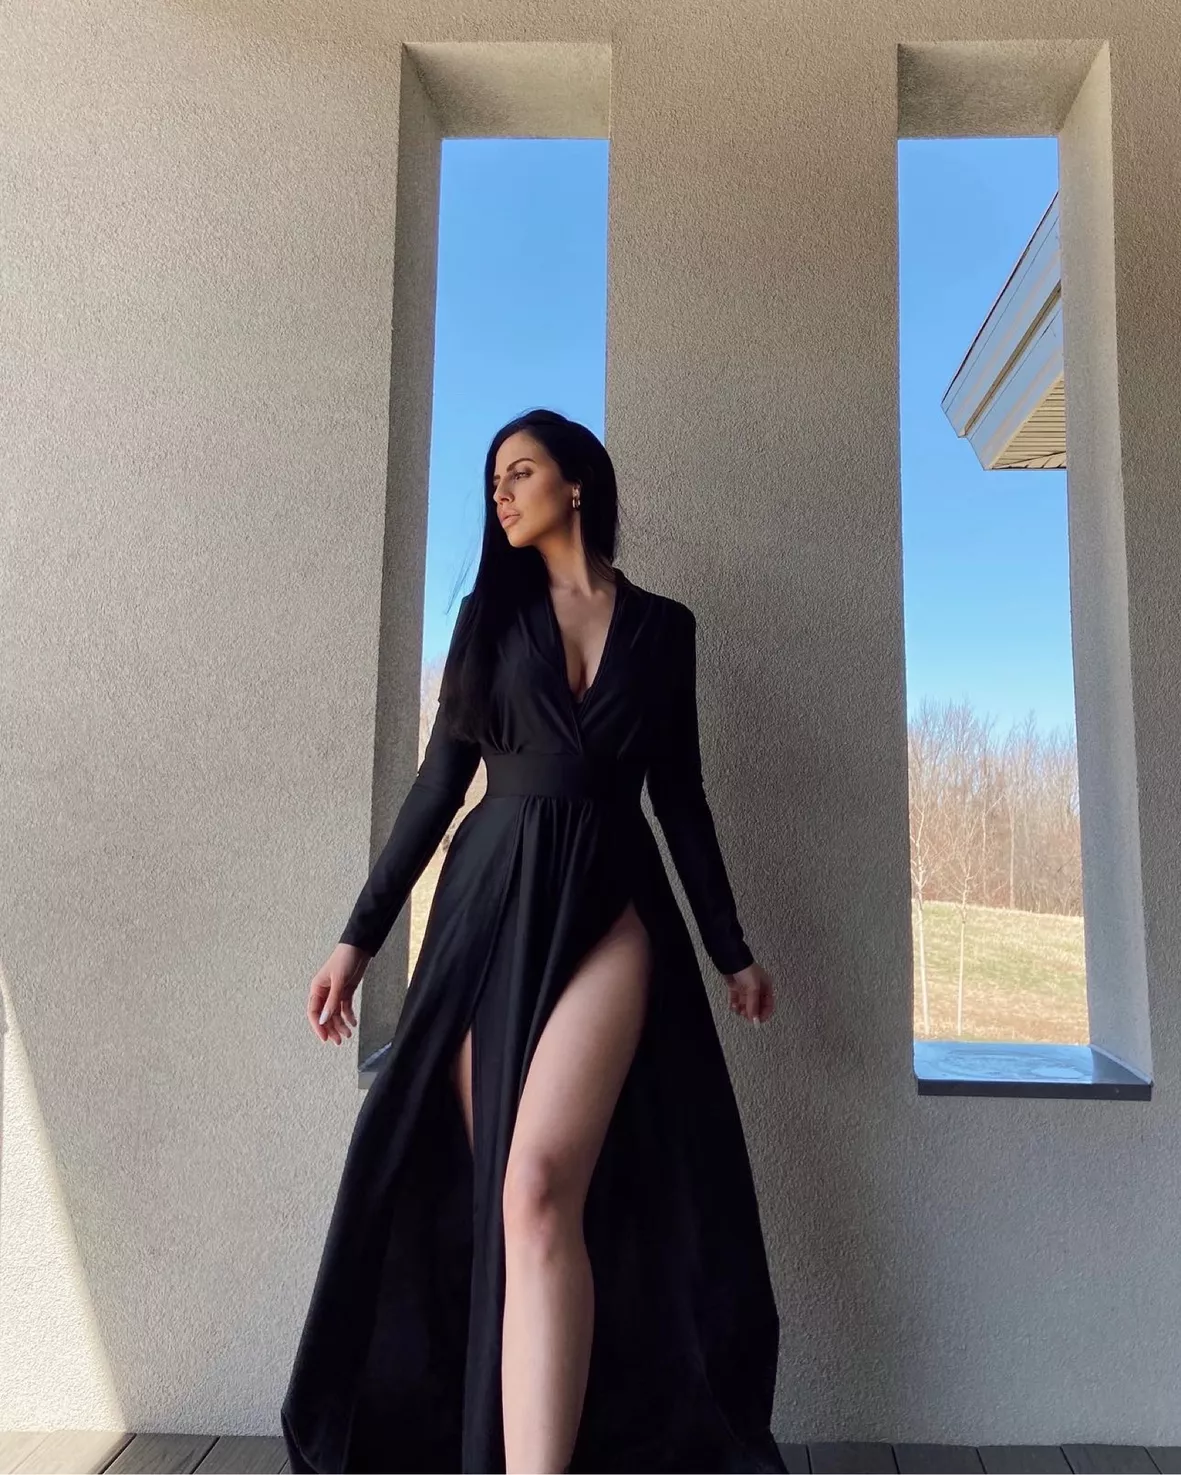 Spree Dress and Sin Heels by Fashion Nova